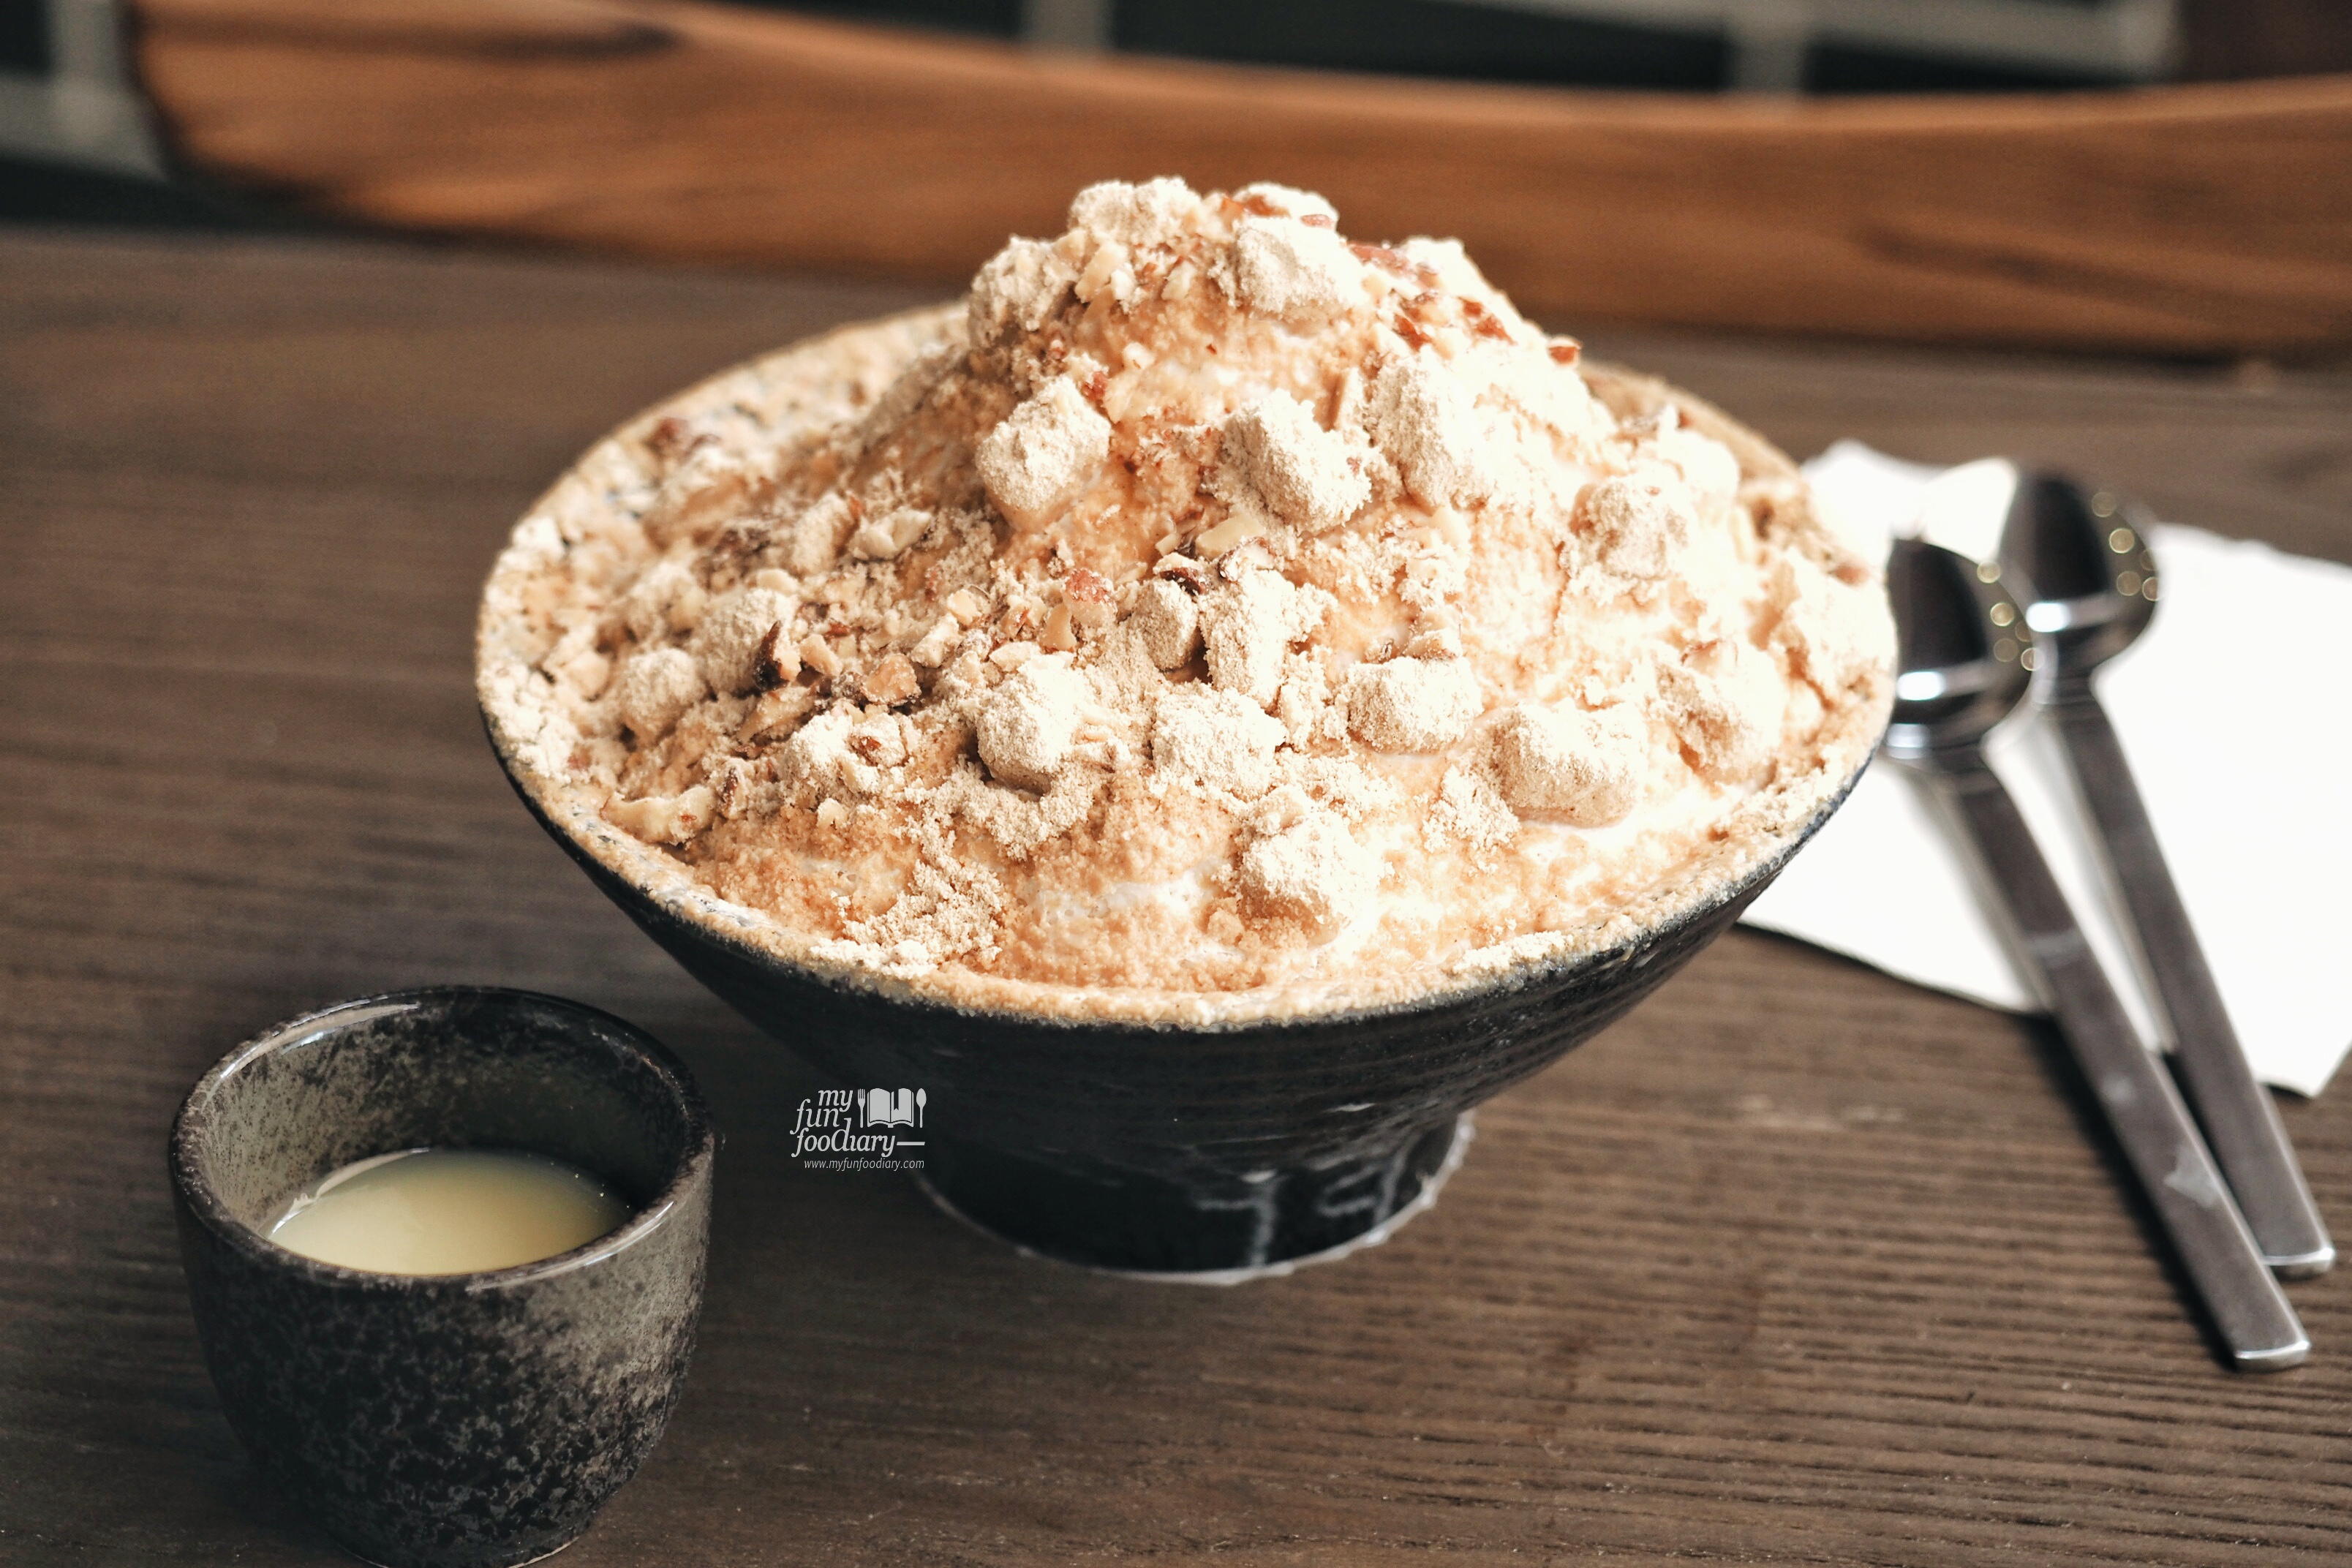 Injeolmi Bing Go Korean Dessert Cafe by Myfunfoodiary